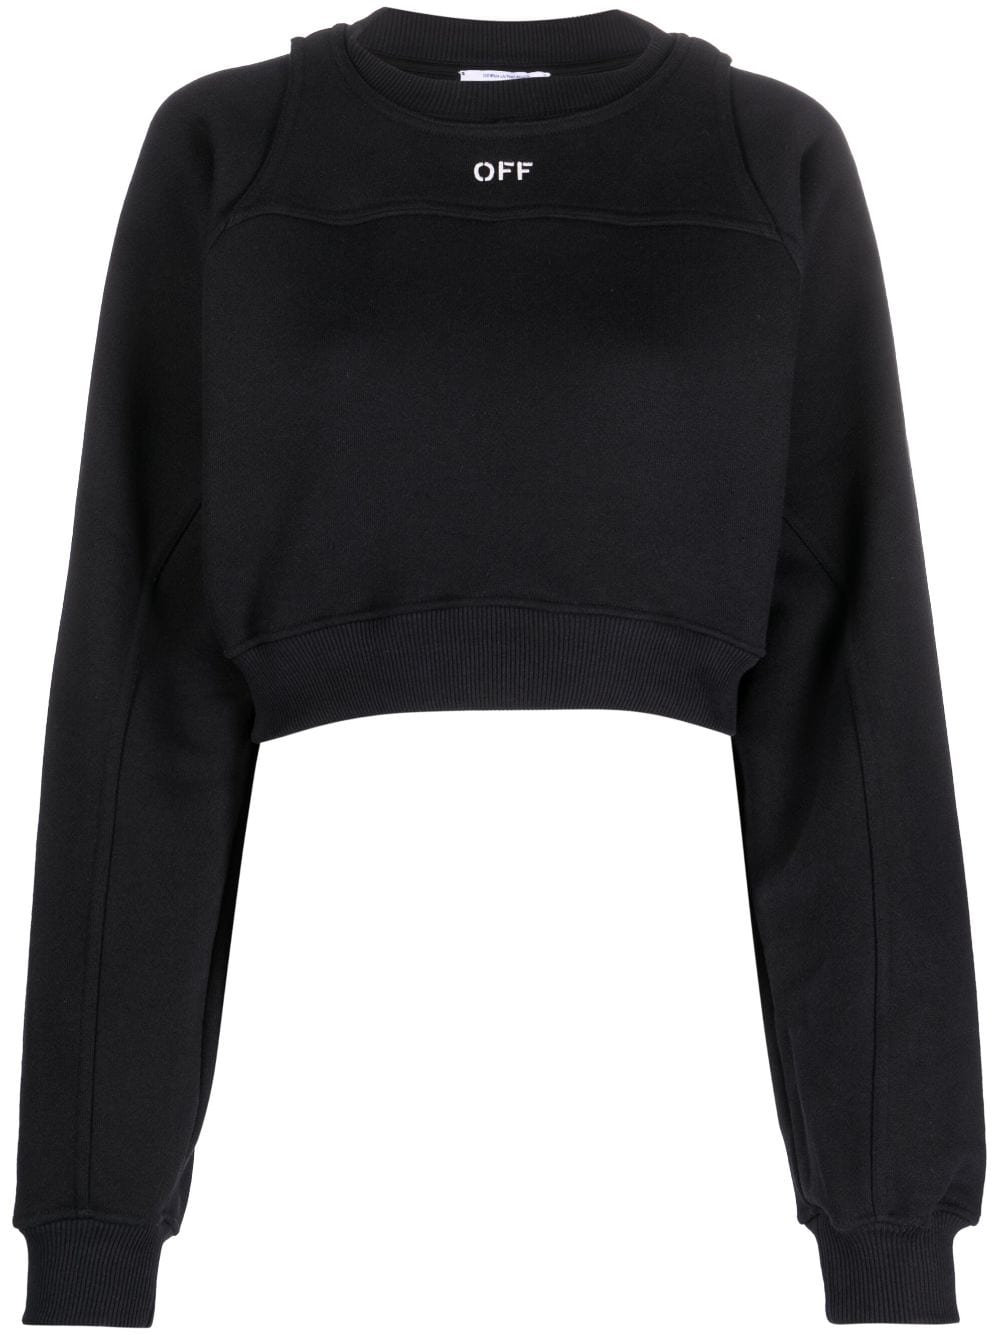 OFF-WHITE Black and White Round Crop Sweatshirt for Women